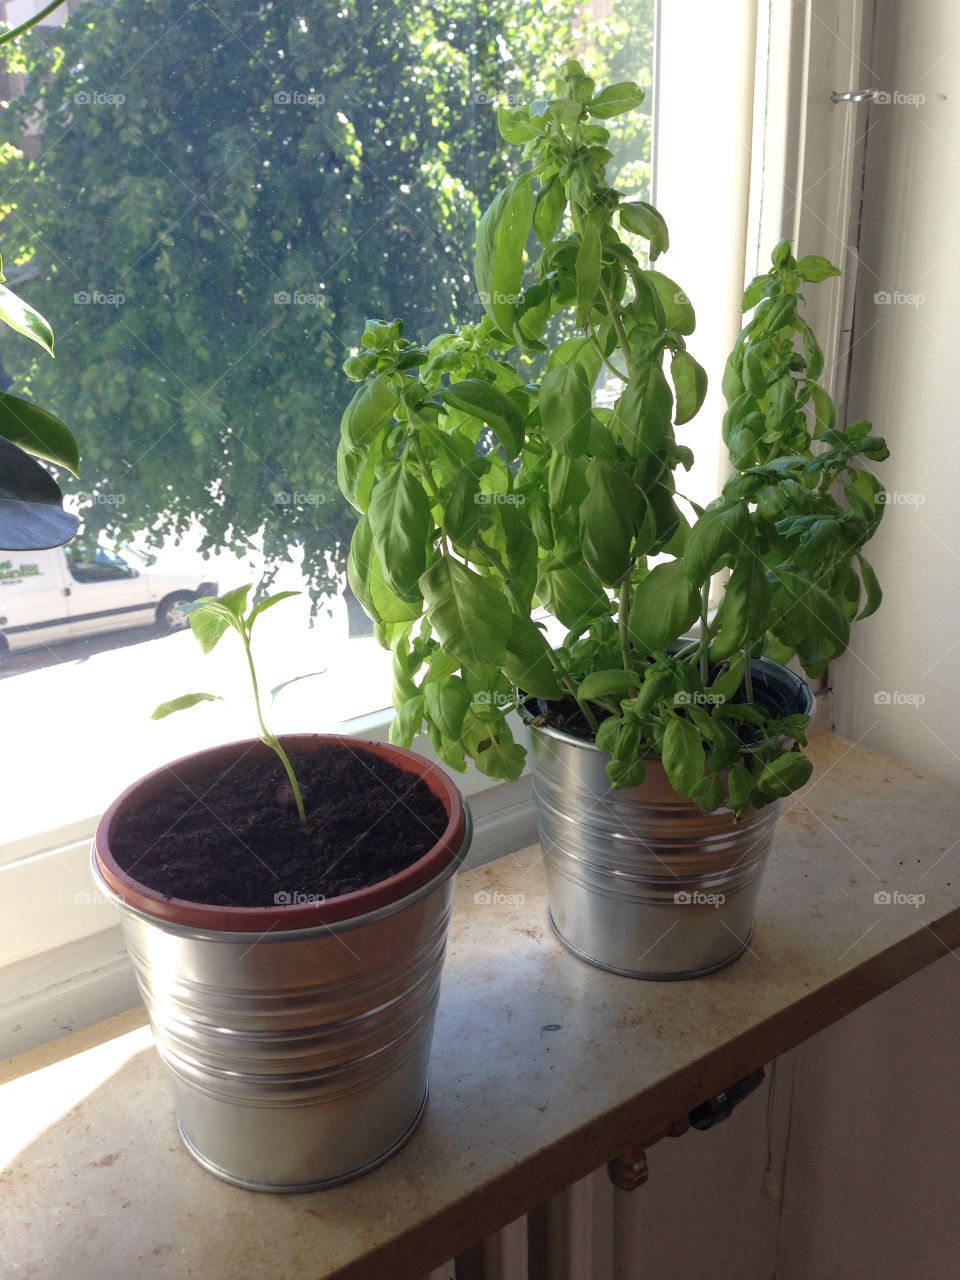 Growing herbs in kitchen 